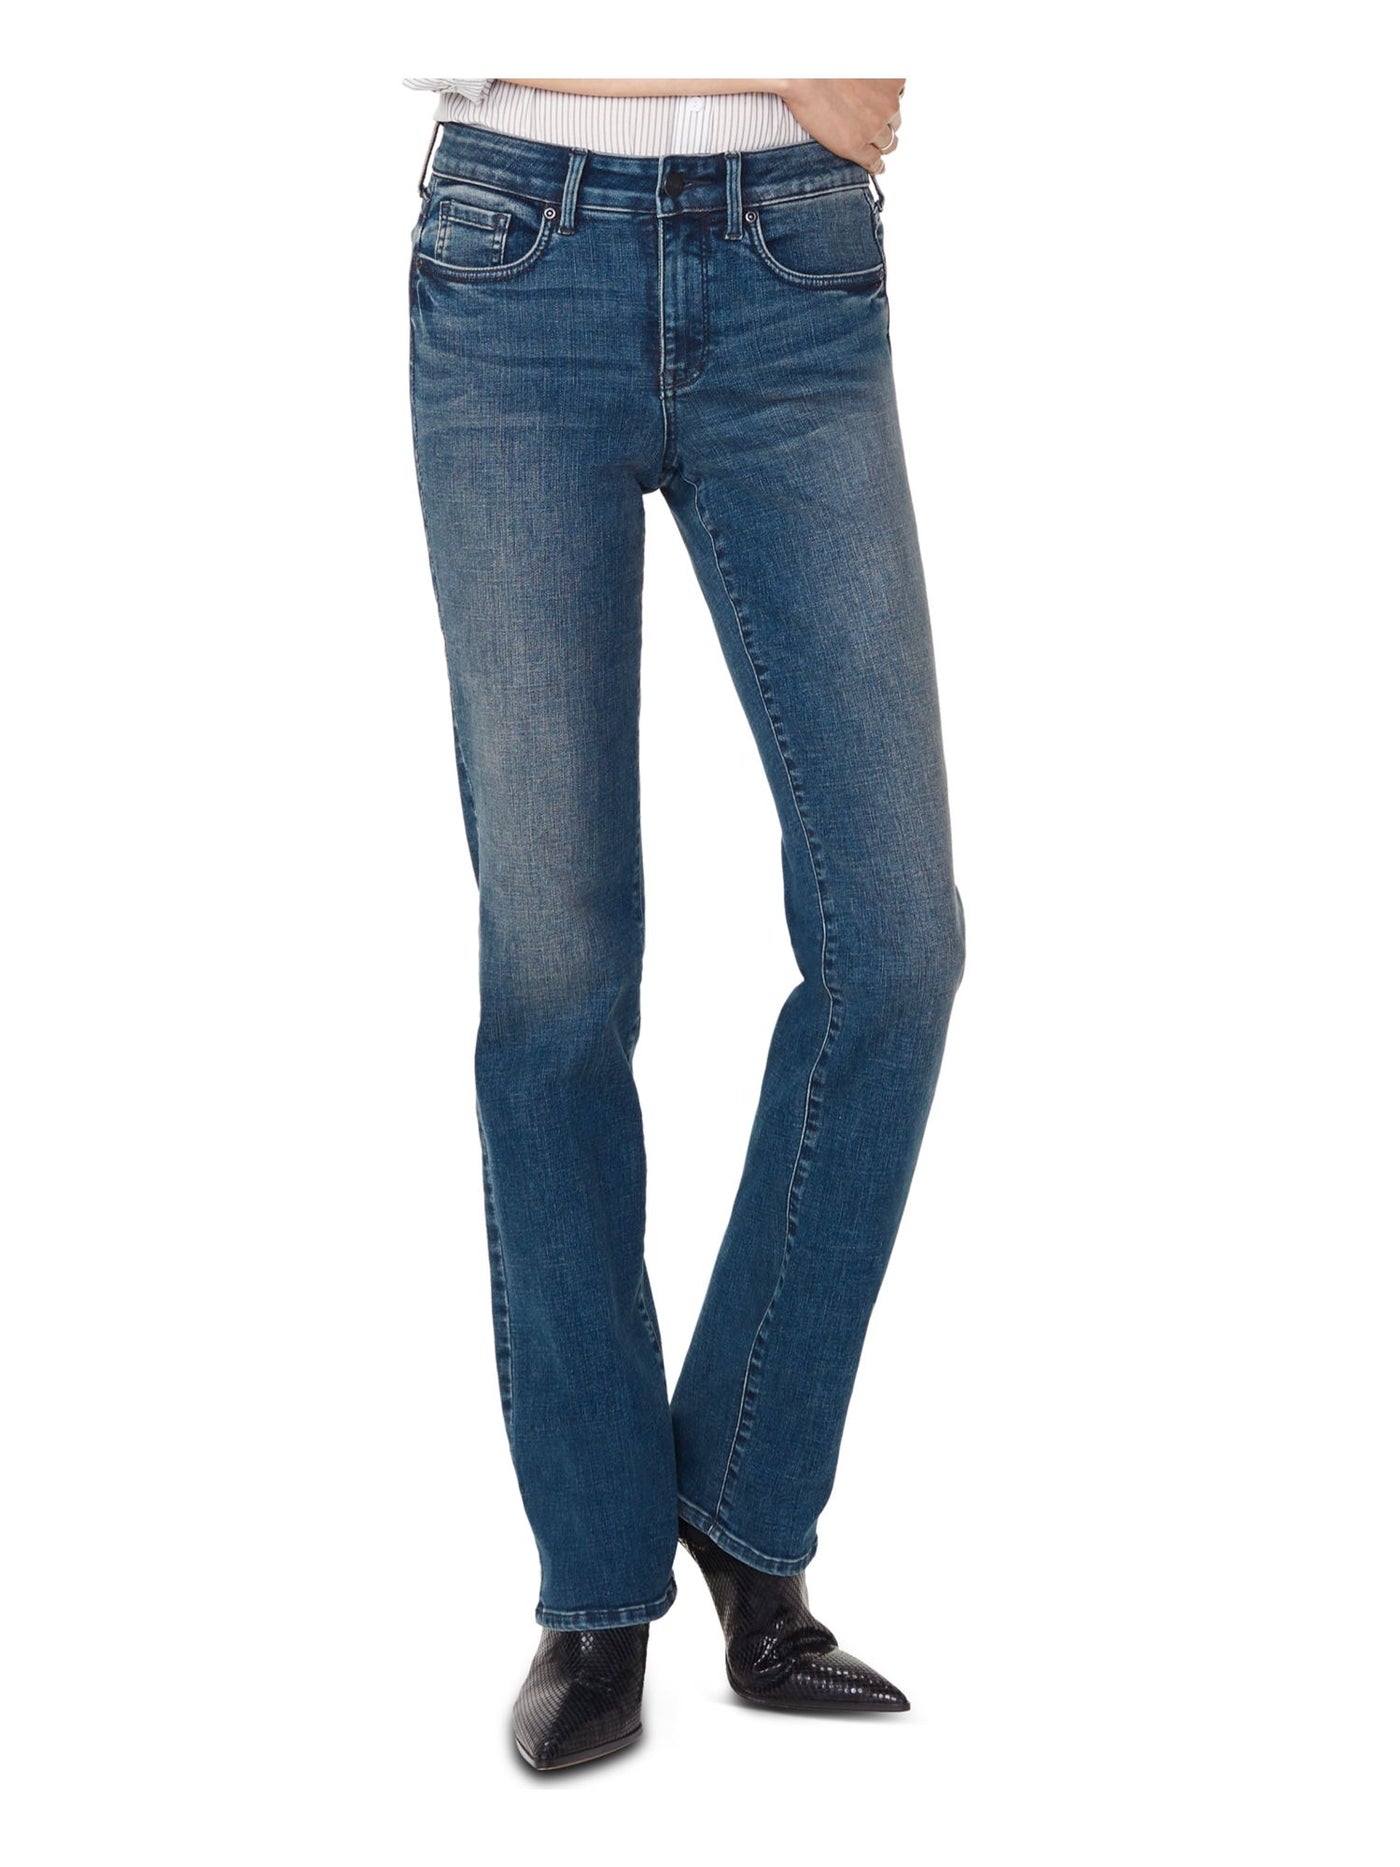 NYDJ Womens Blue Straight leg Jeans 0